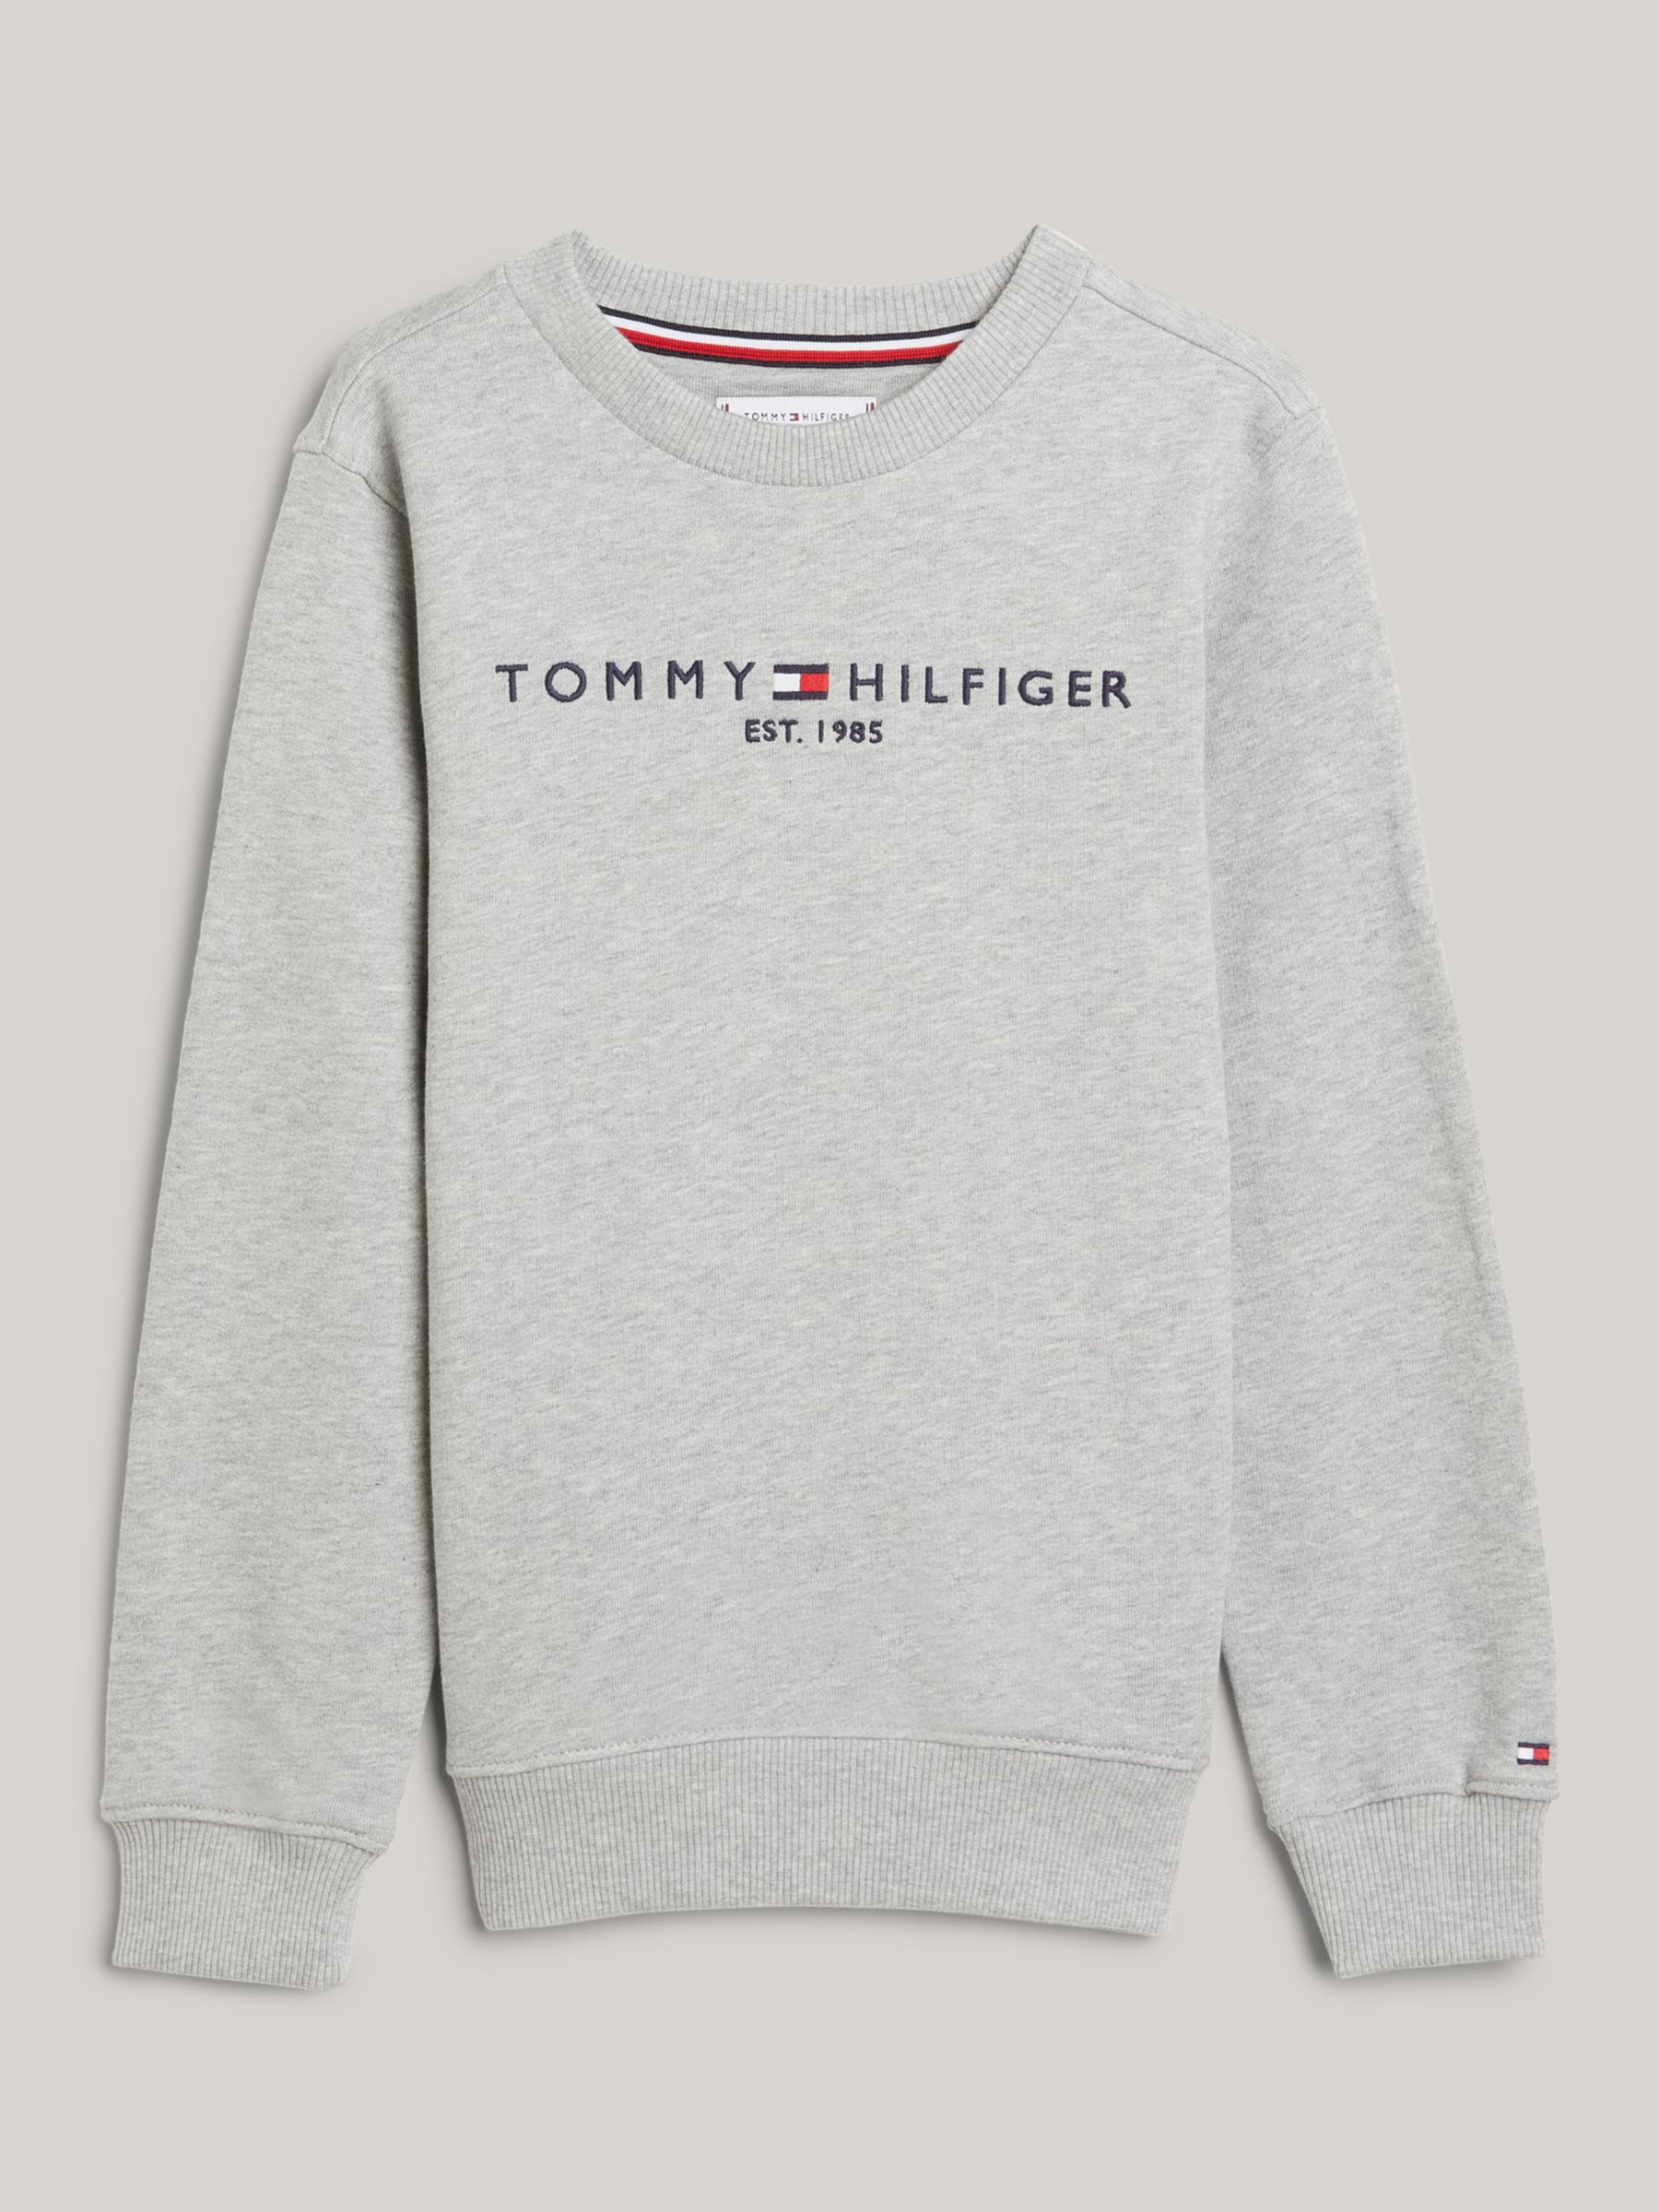 Tommy Hilfiger Kids\' Essential Organic Cotton Logo Sweatshirt, Light Grey  Heather at John Lewis & Partners